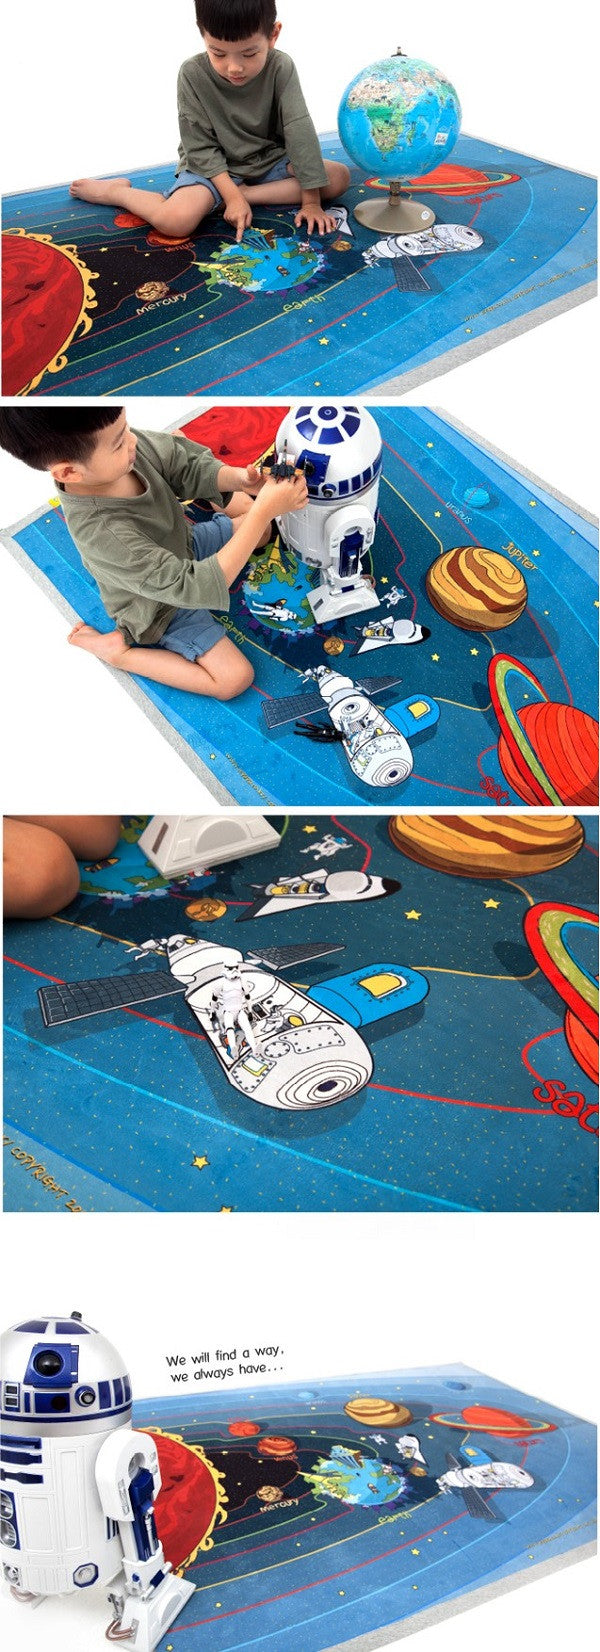 universe playmat kids spade learning carpet